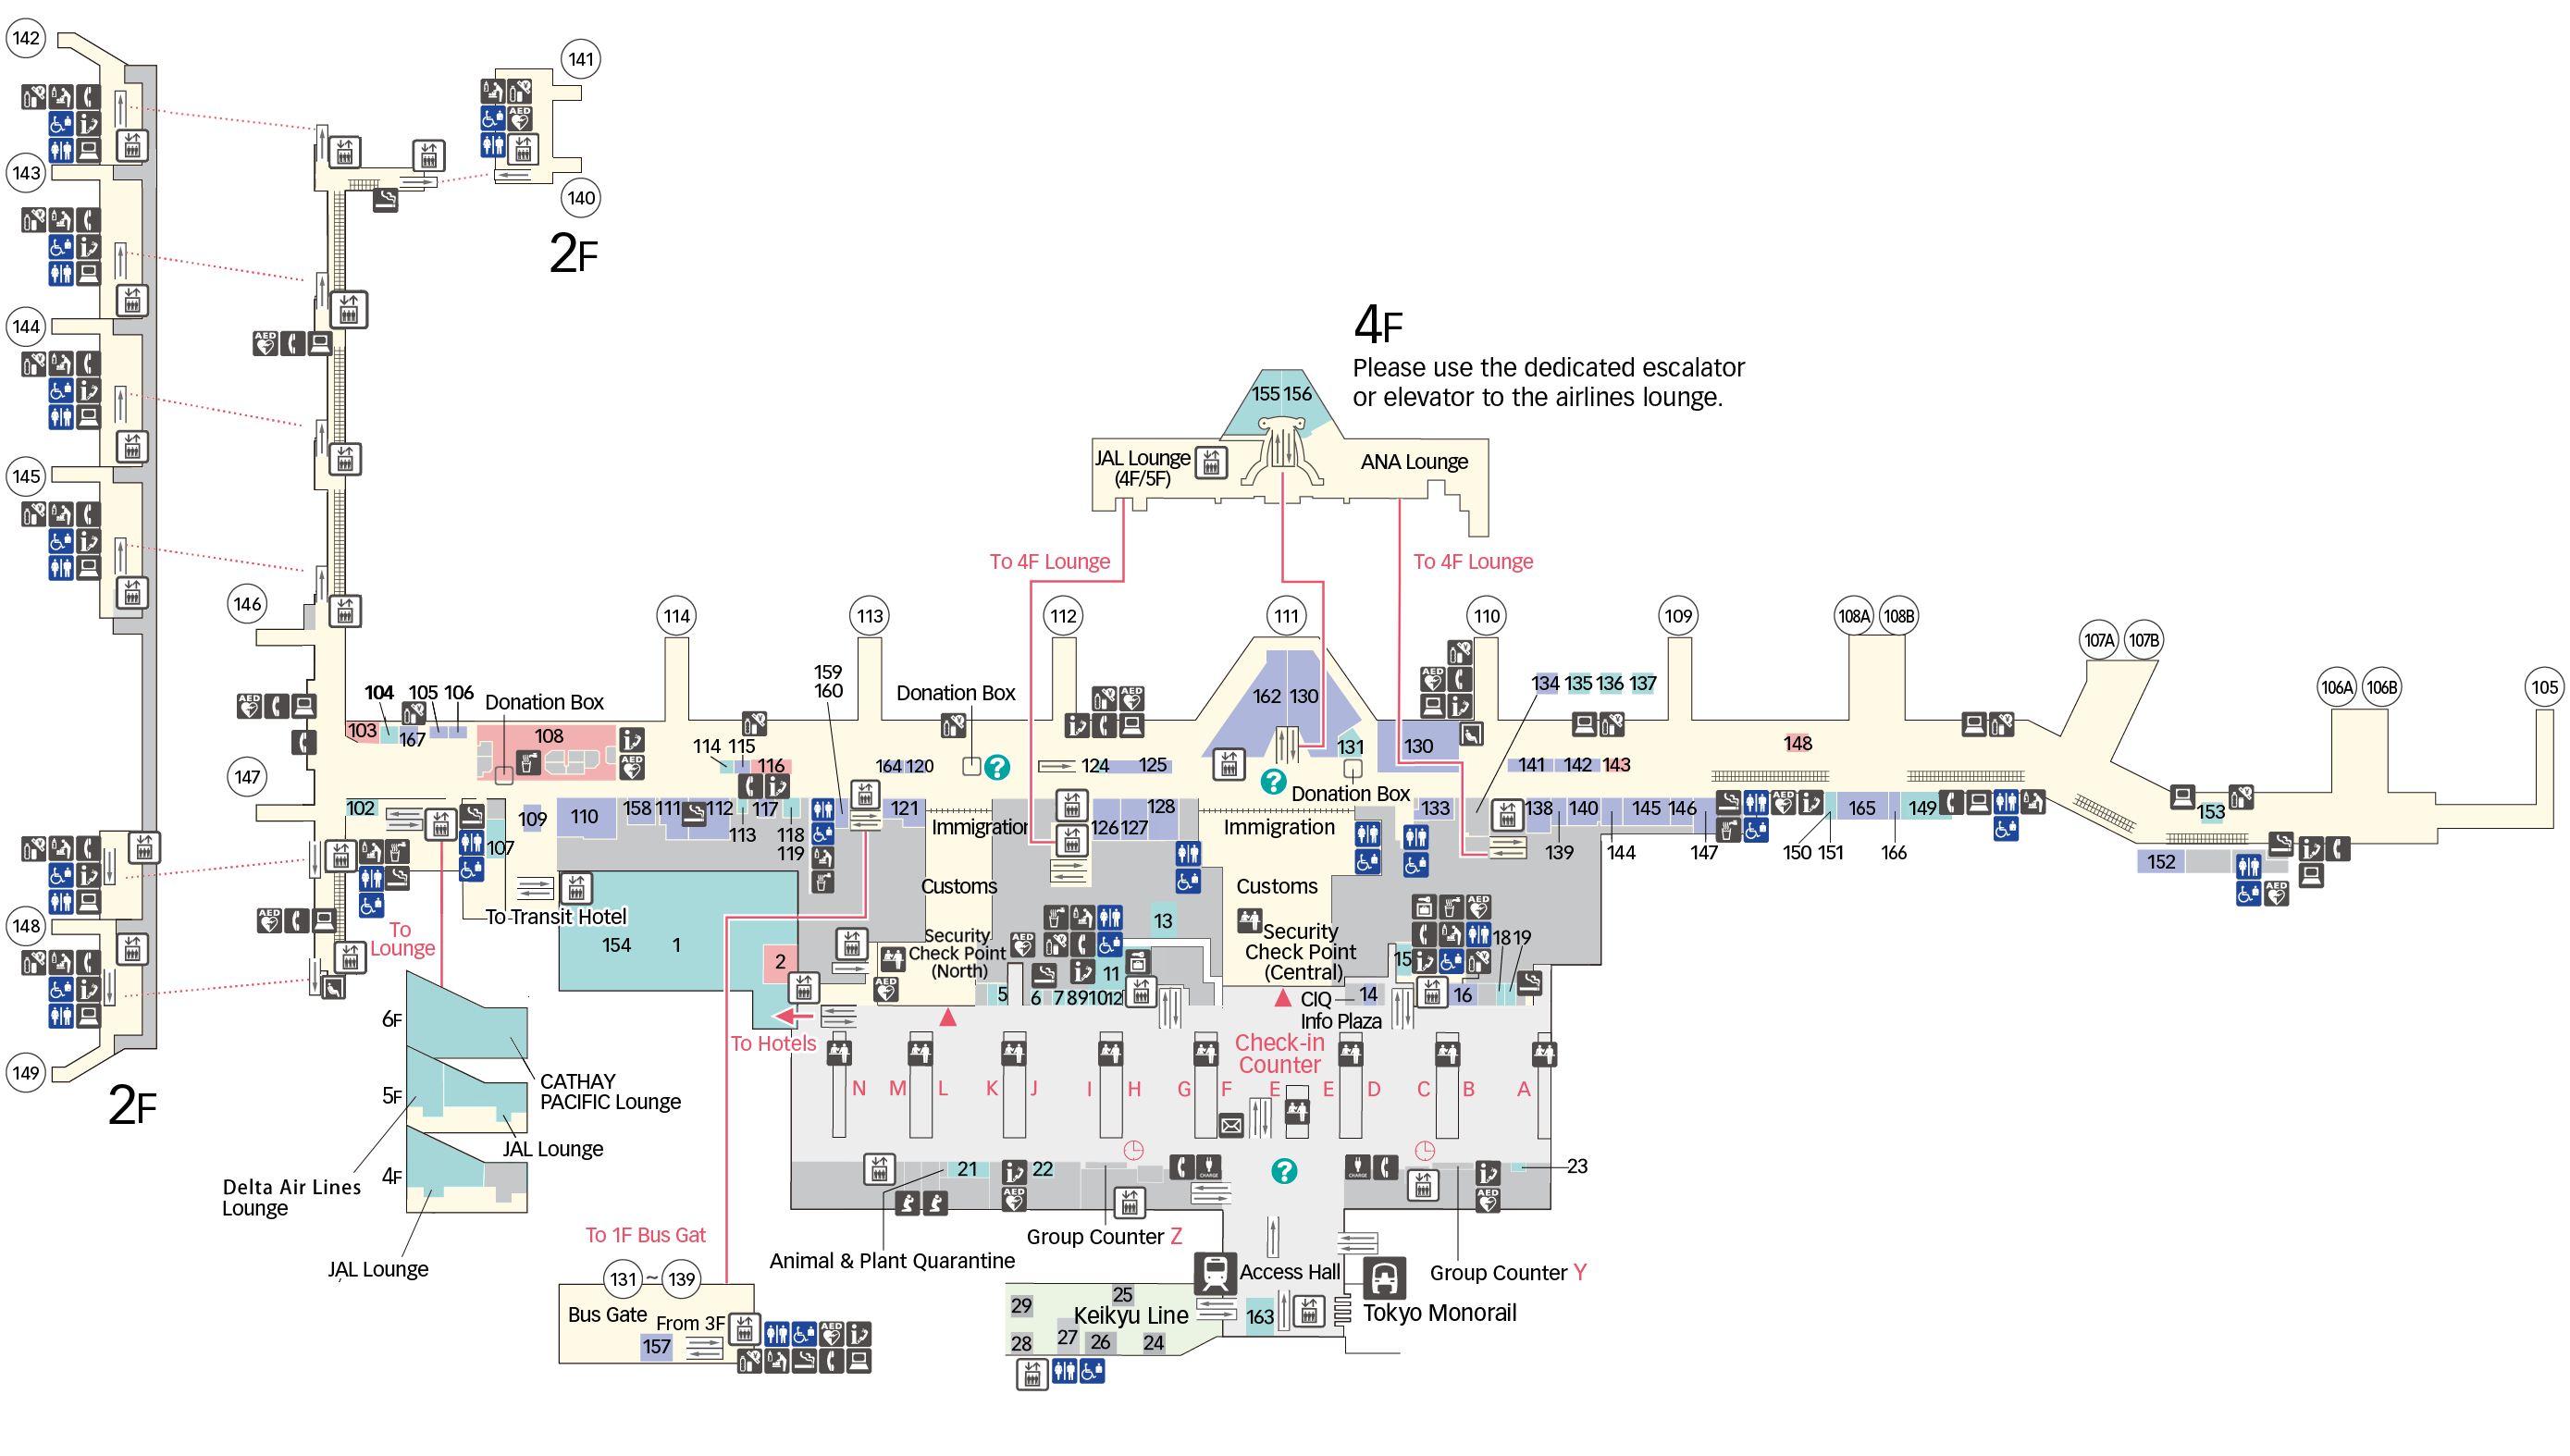 3F Departure lobby Floor Map